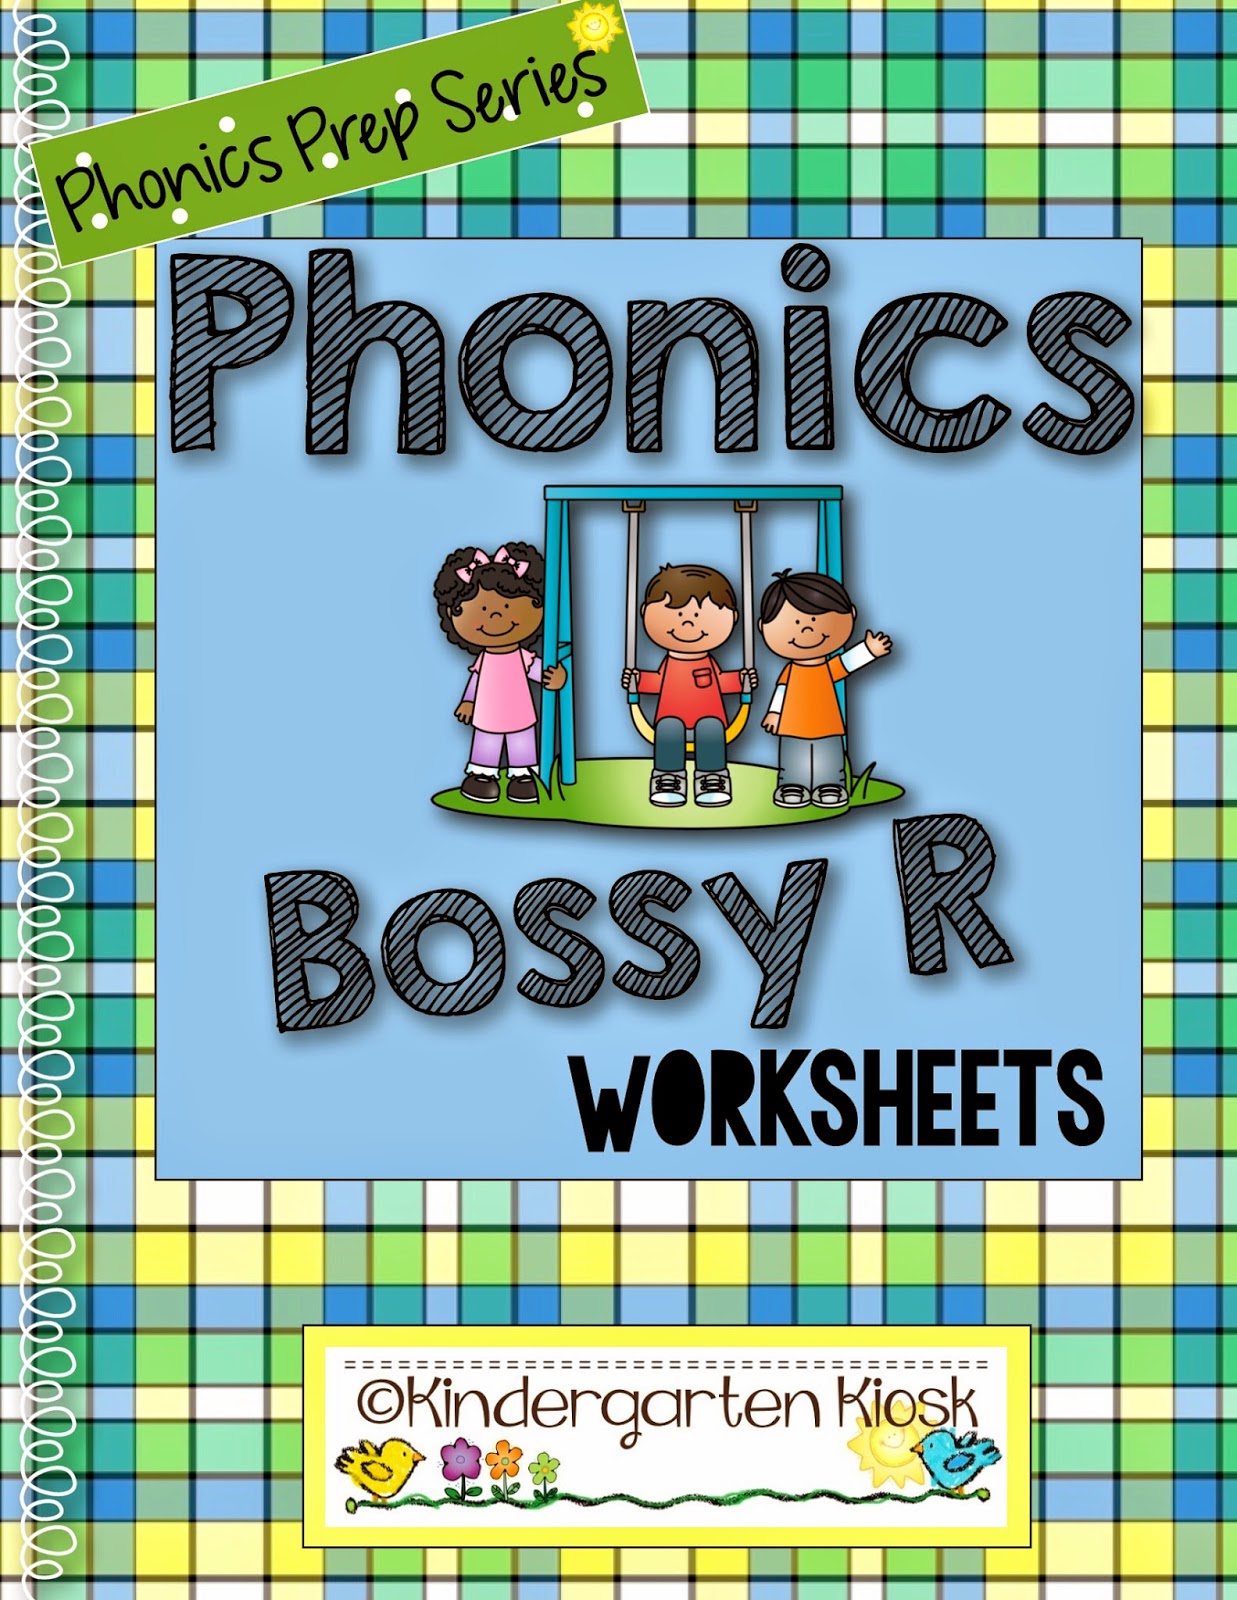 kindergarten-kiosk-r-controlled-bossy-r-worksheets